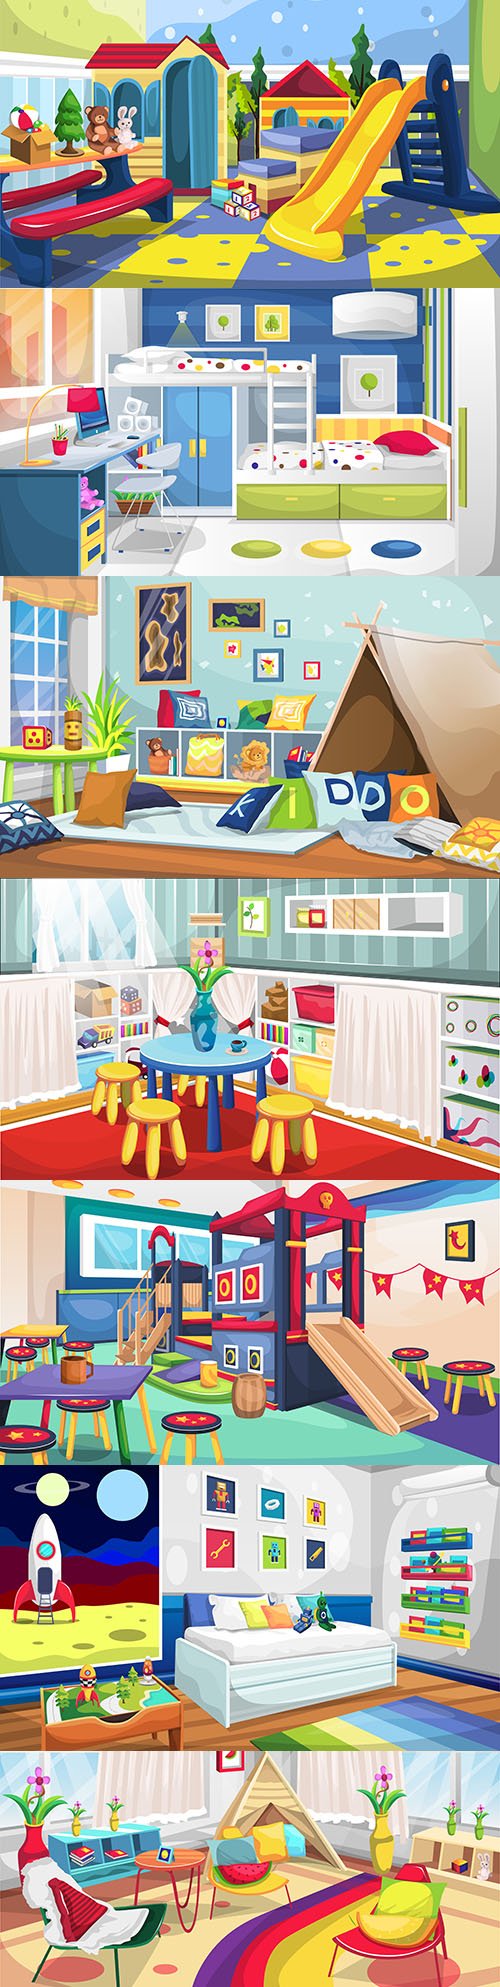 Children 's playroom design setting illustration vector